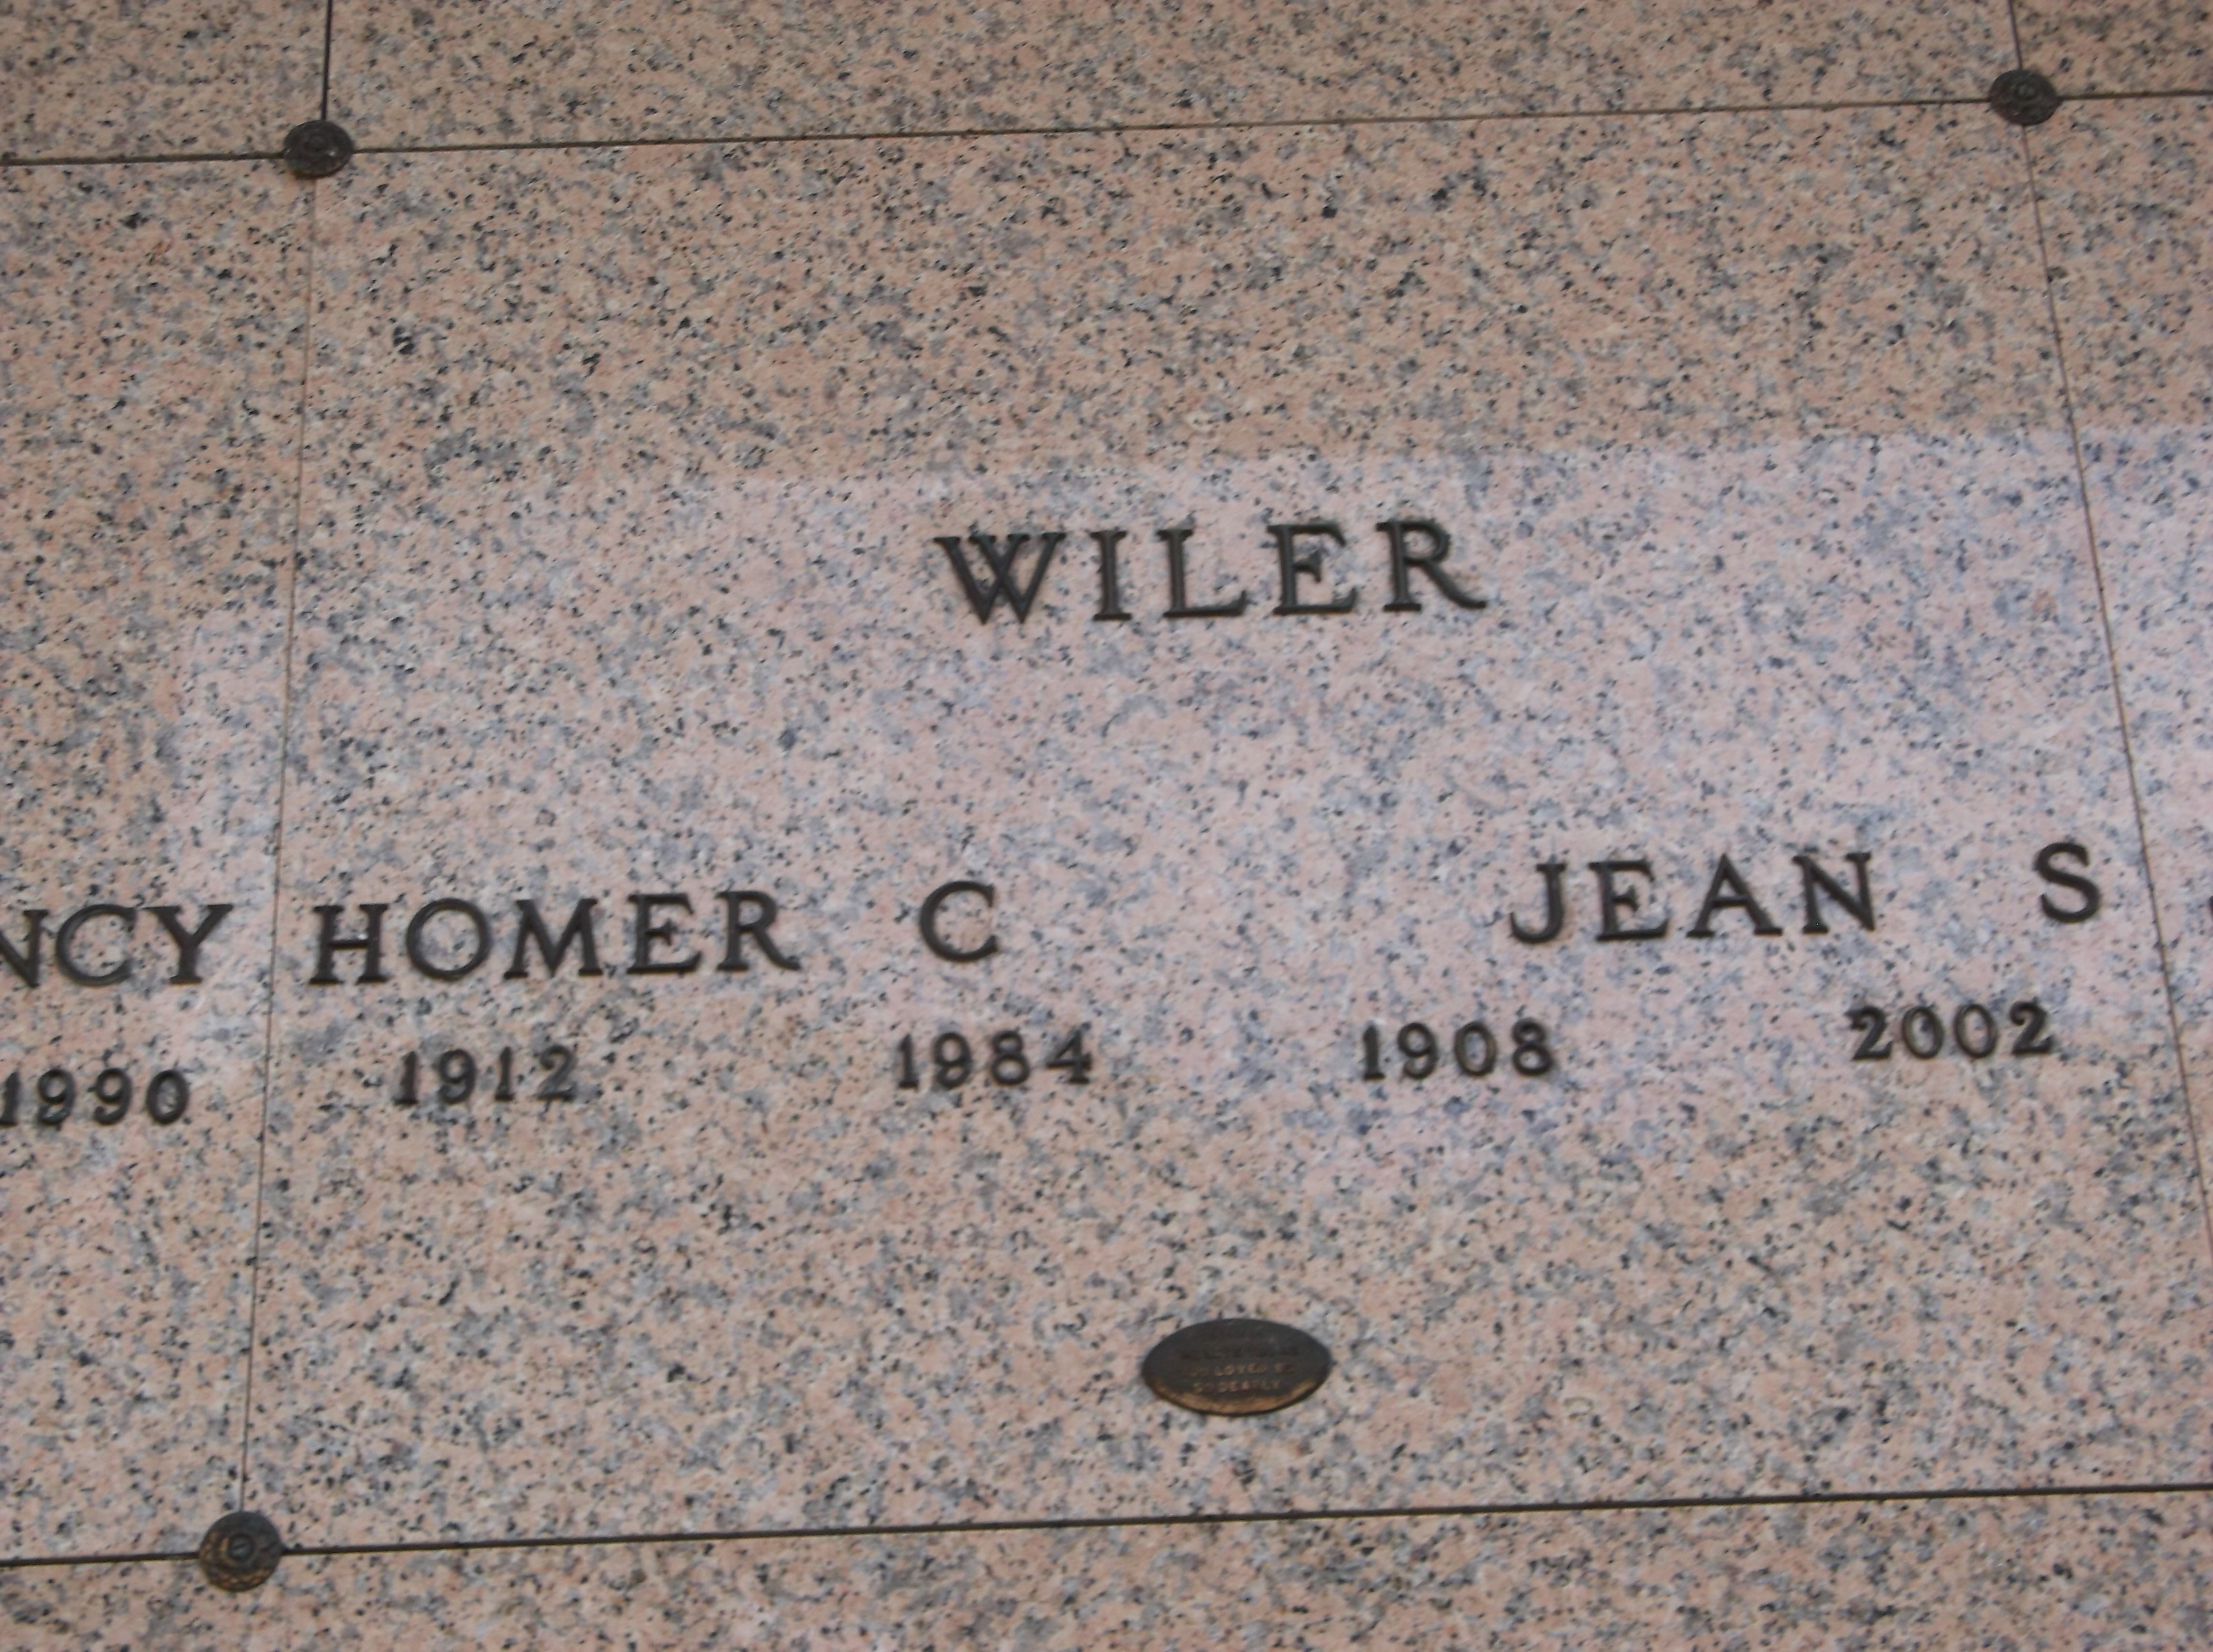 Jean S Wiler